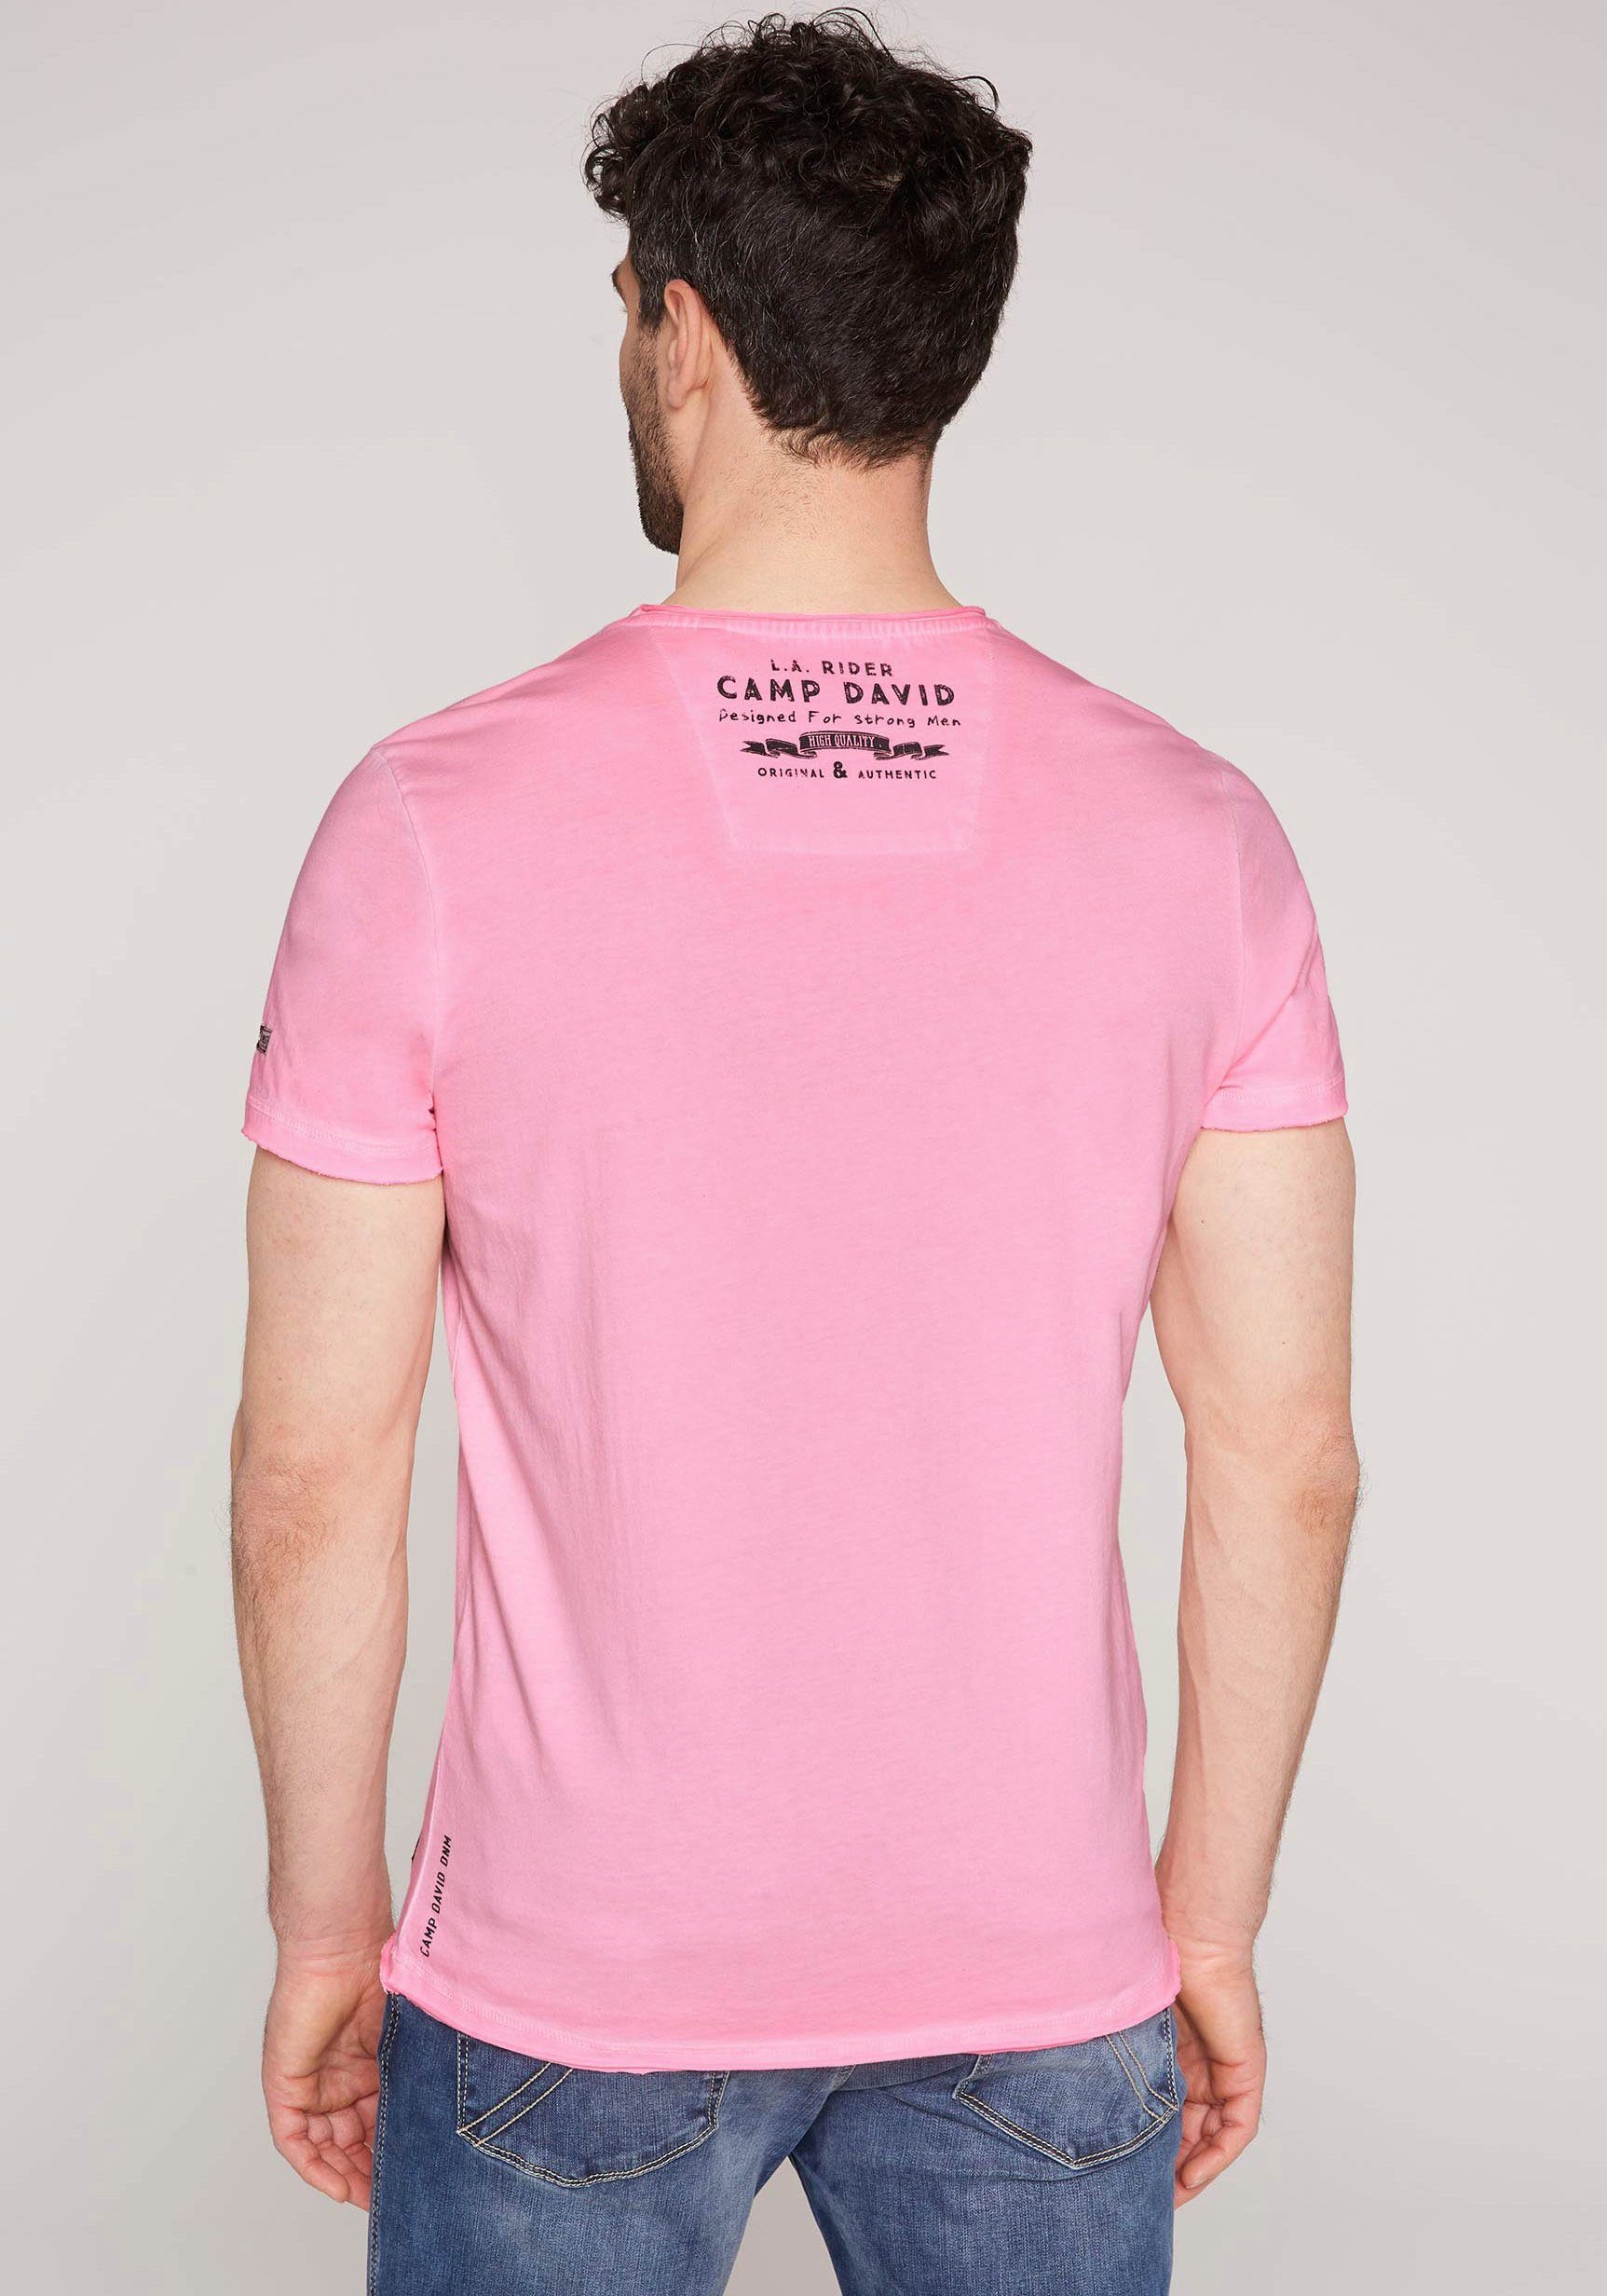 CAMP DAVID T-Shirt neon pink